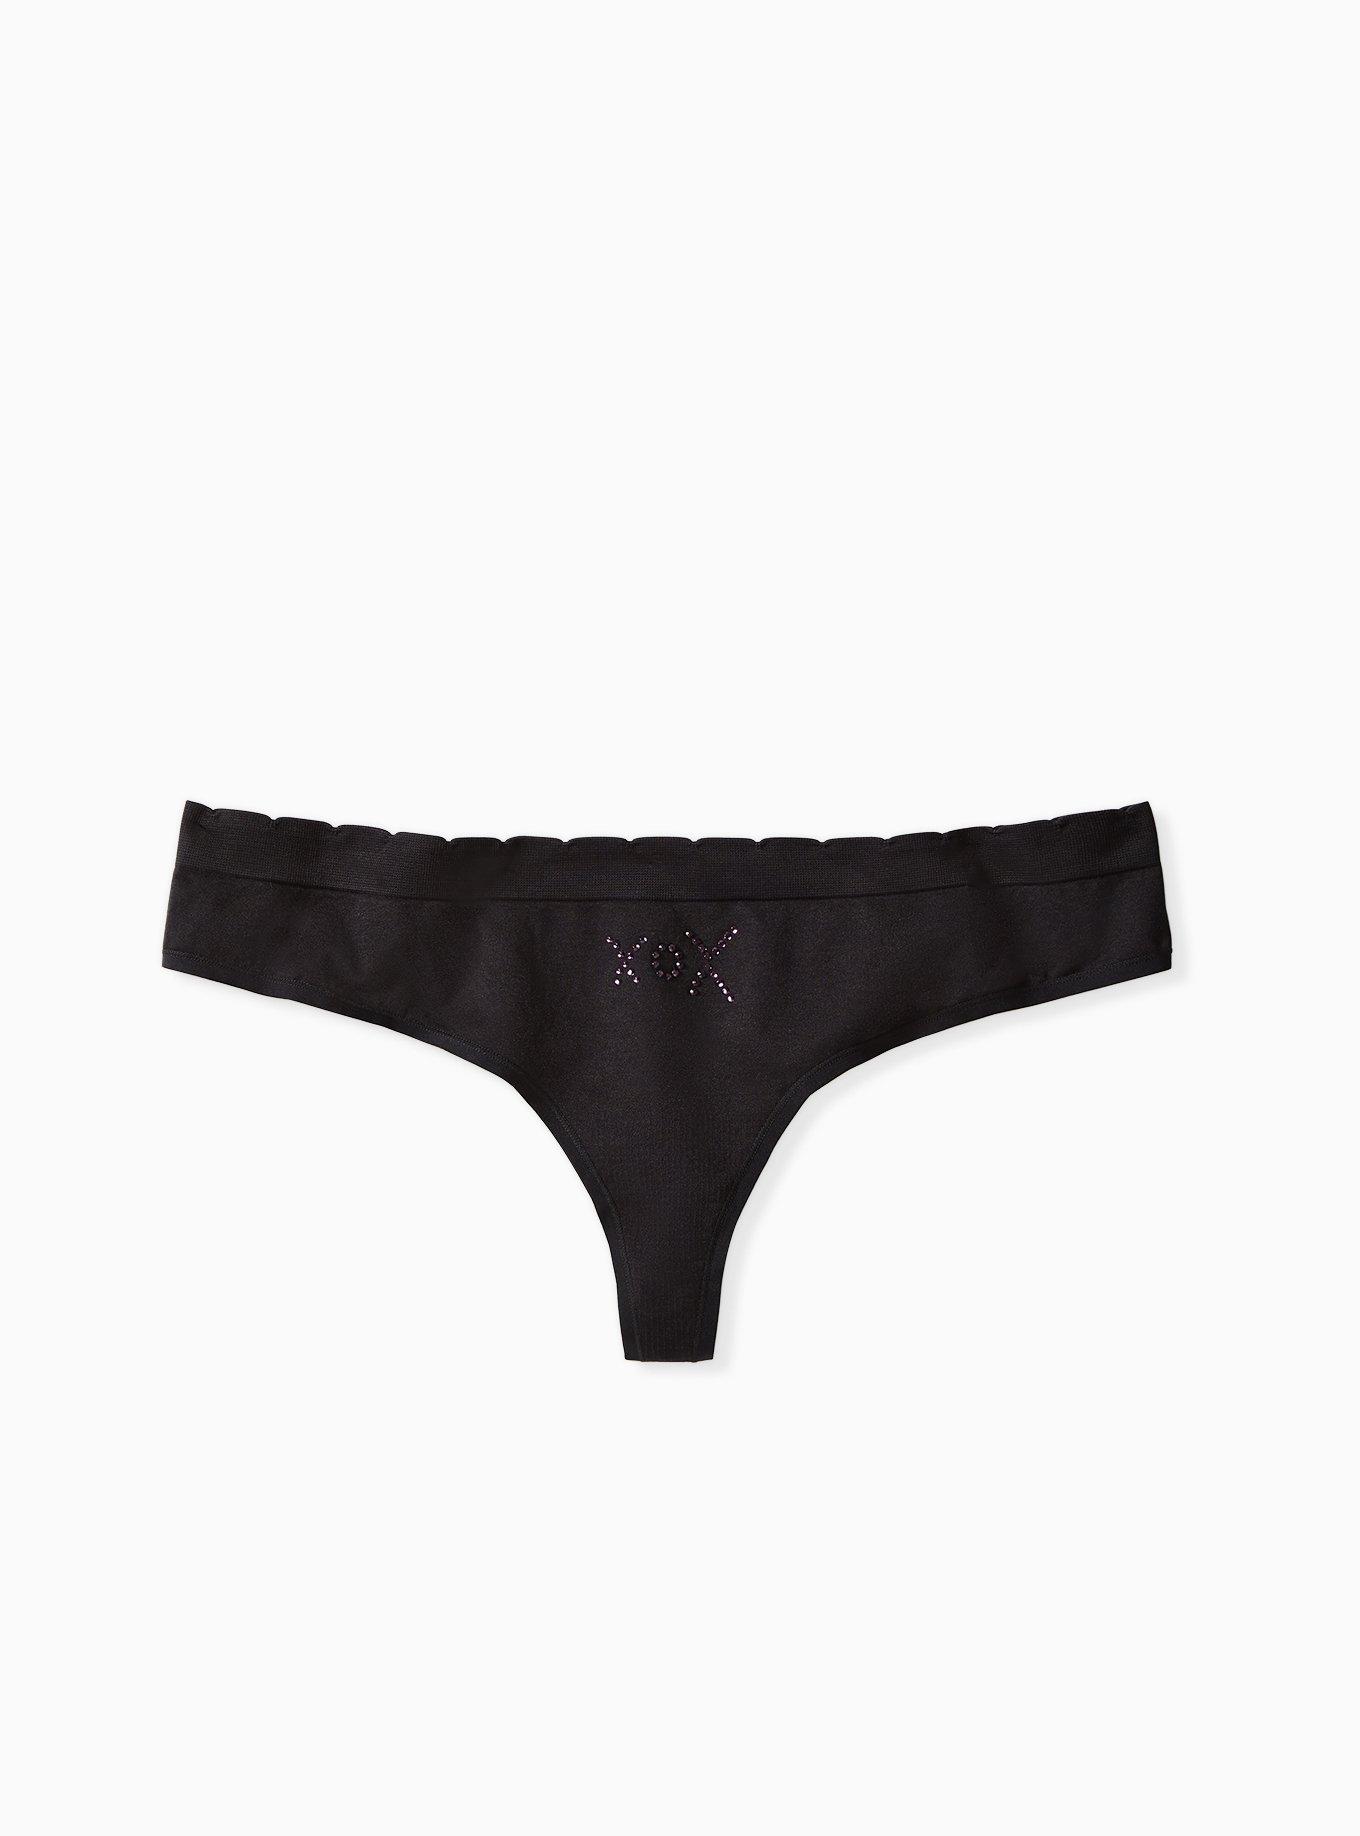 Plus Size - Betsey Johnson XOX Rhinestone Black Seamless Thong Panty -  Torrid